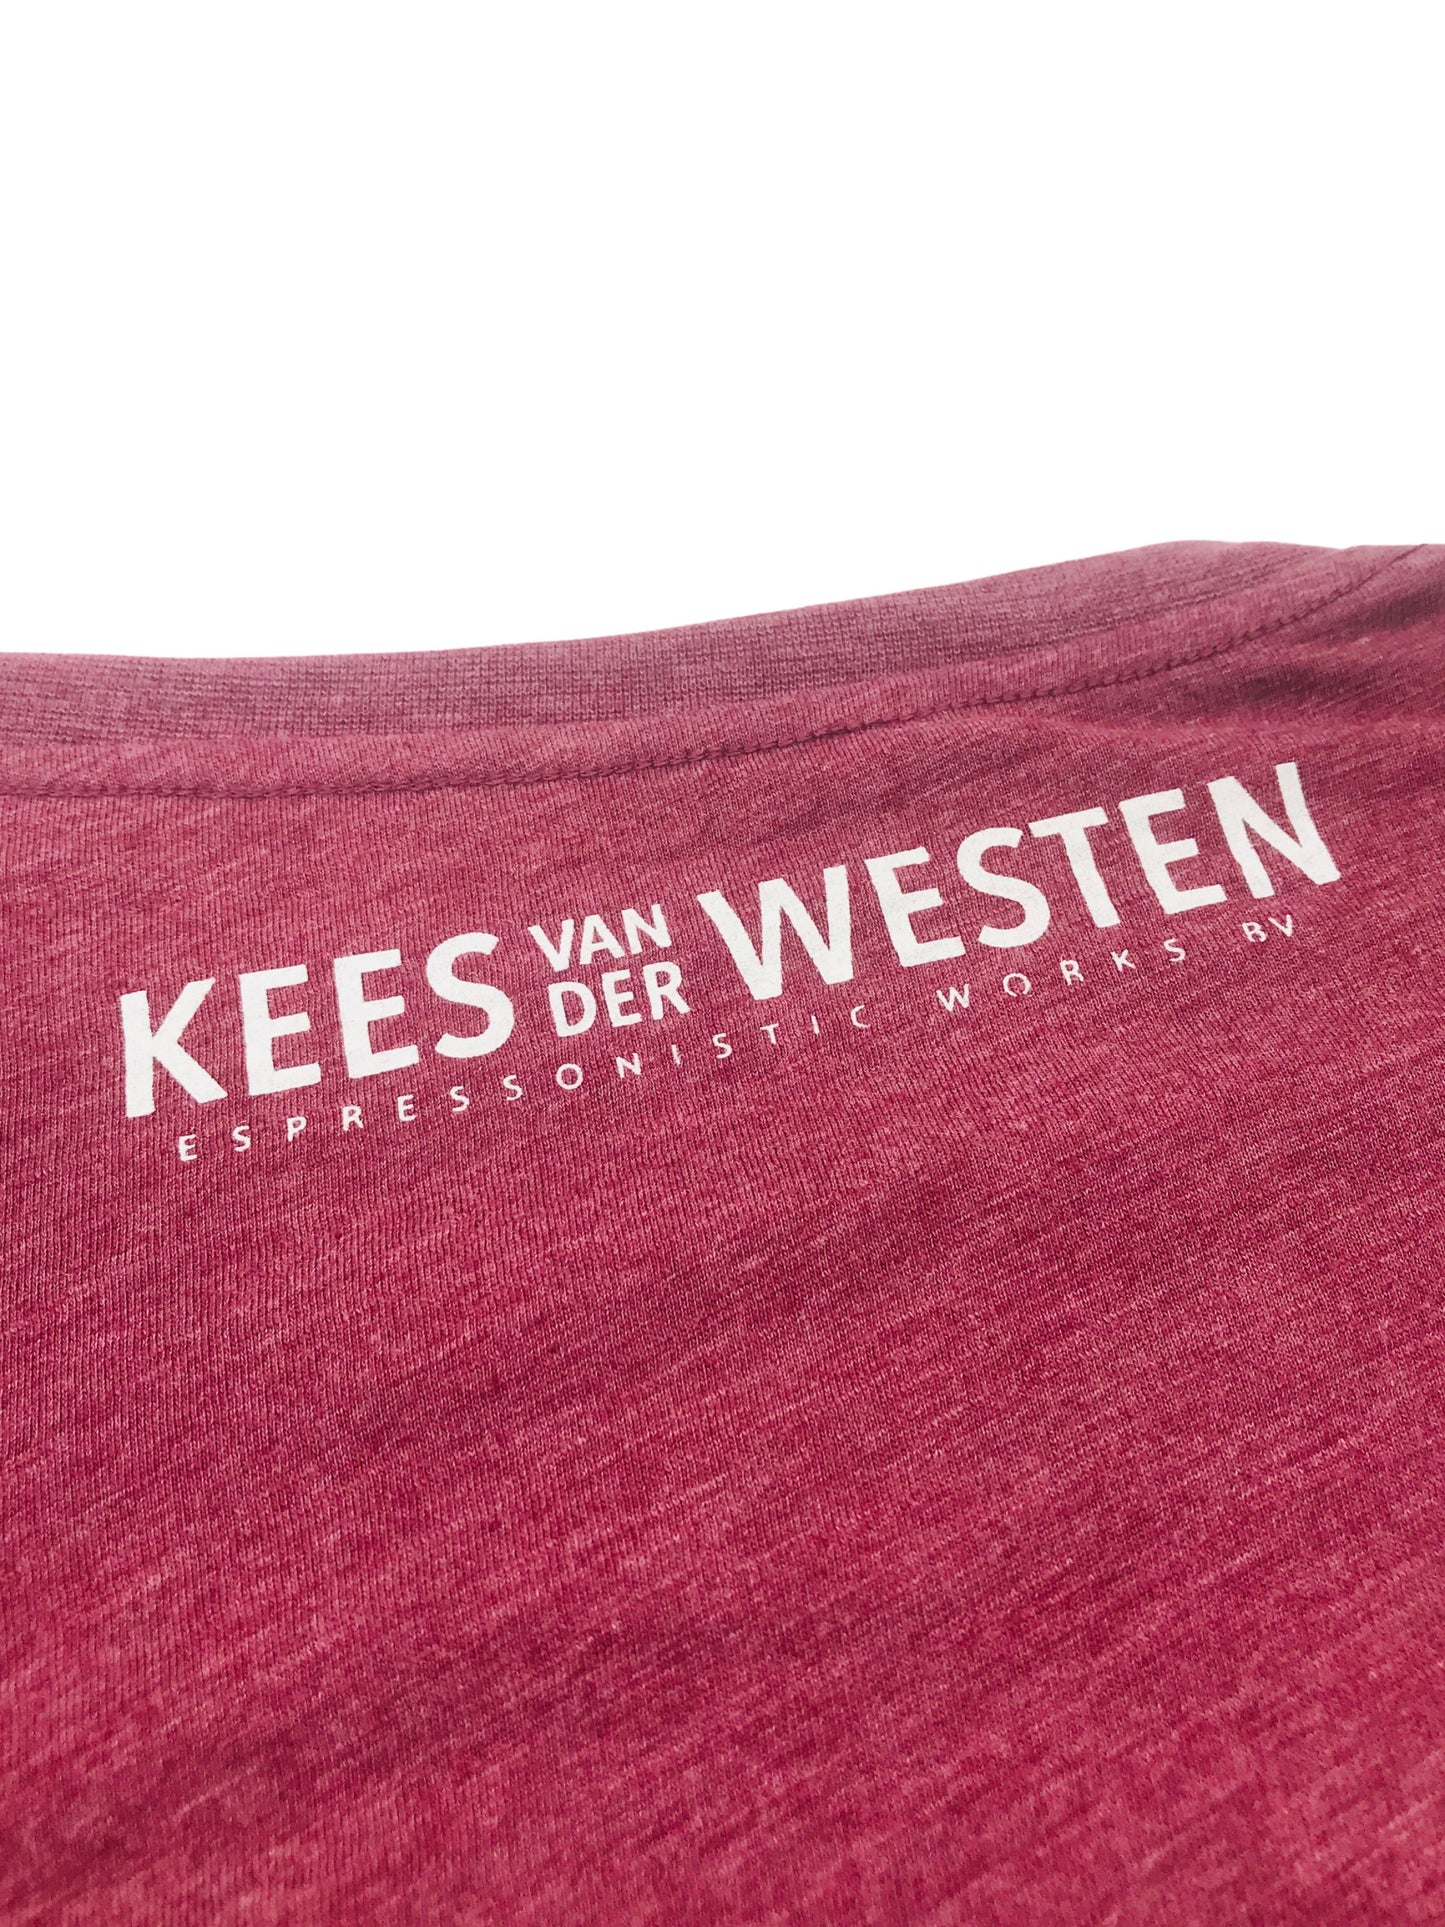 KVDW - Merchandise, "Thats the Spirit" T-shirt Red